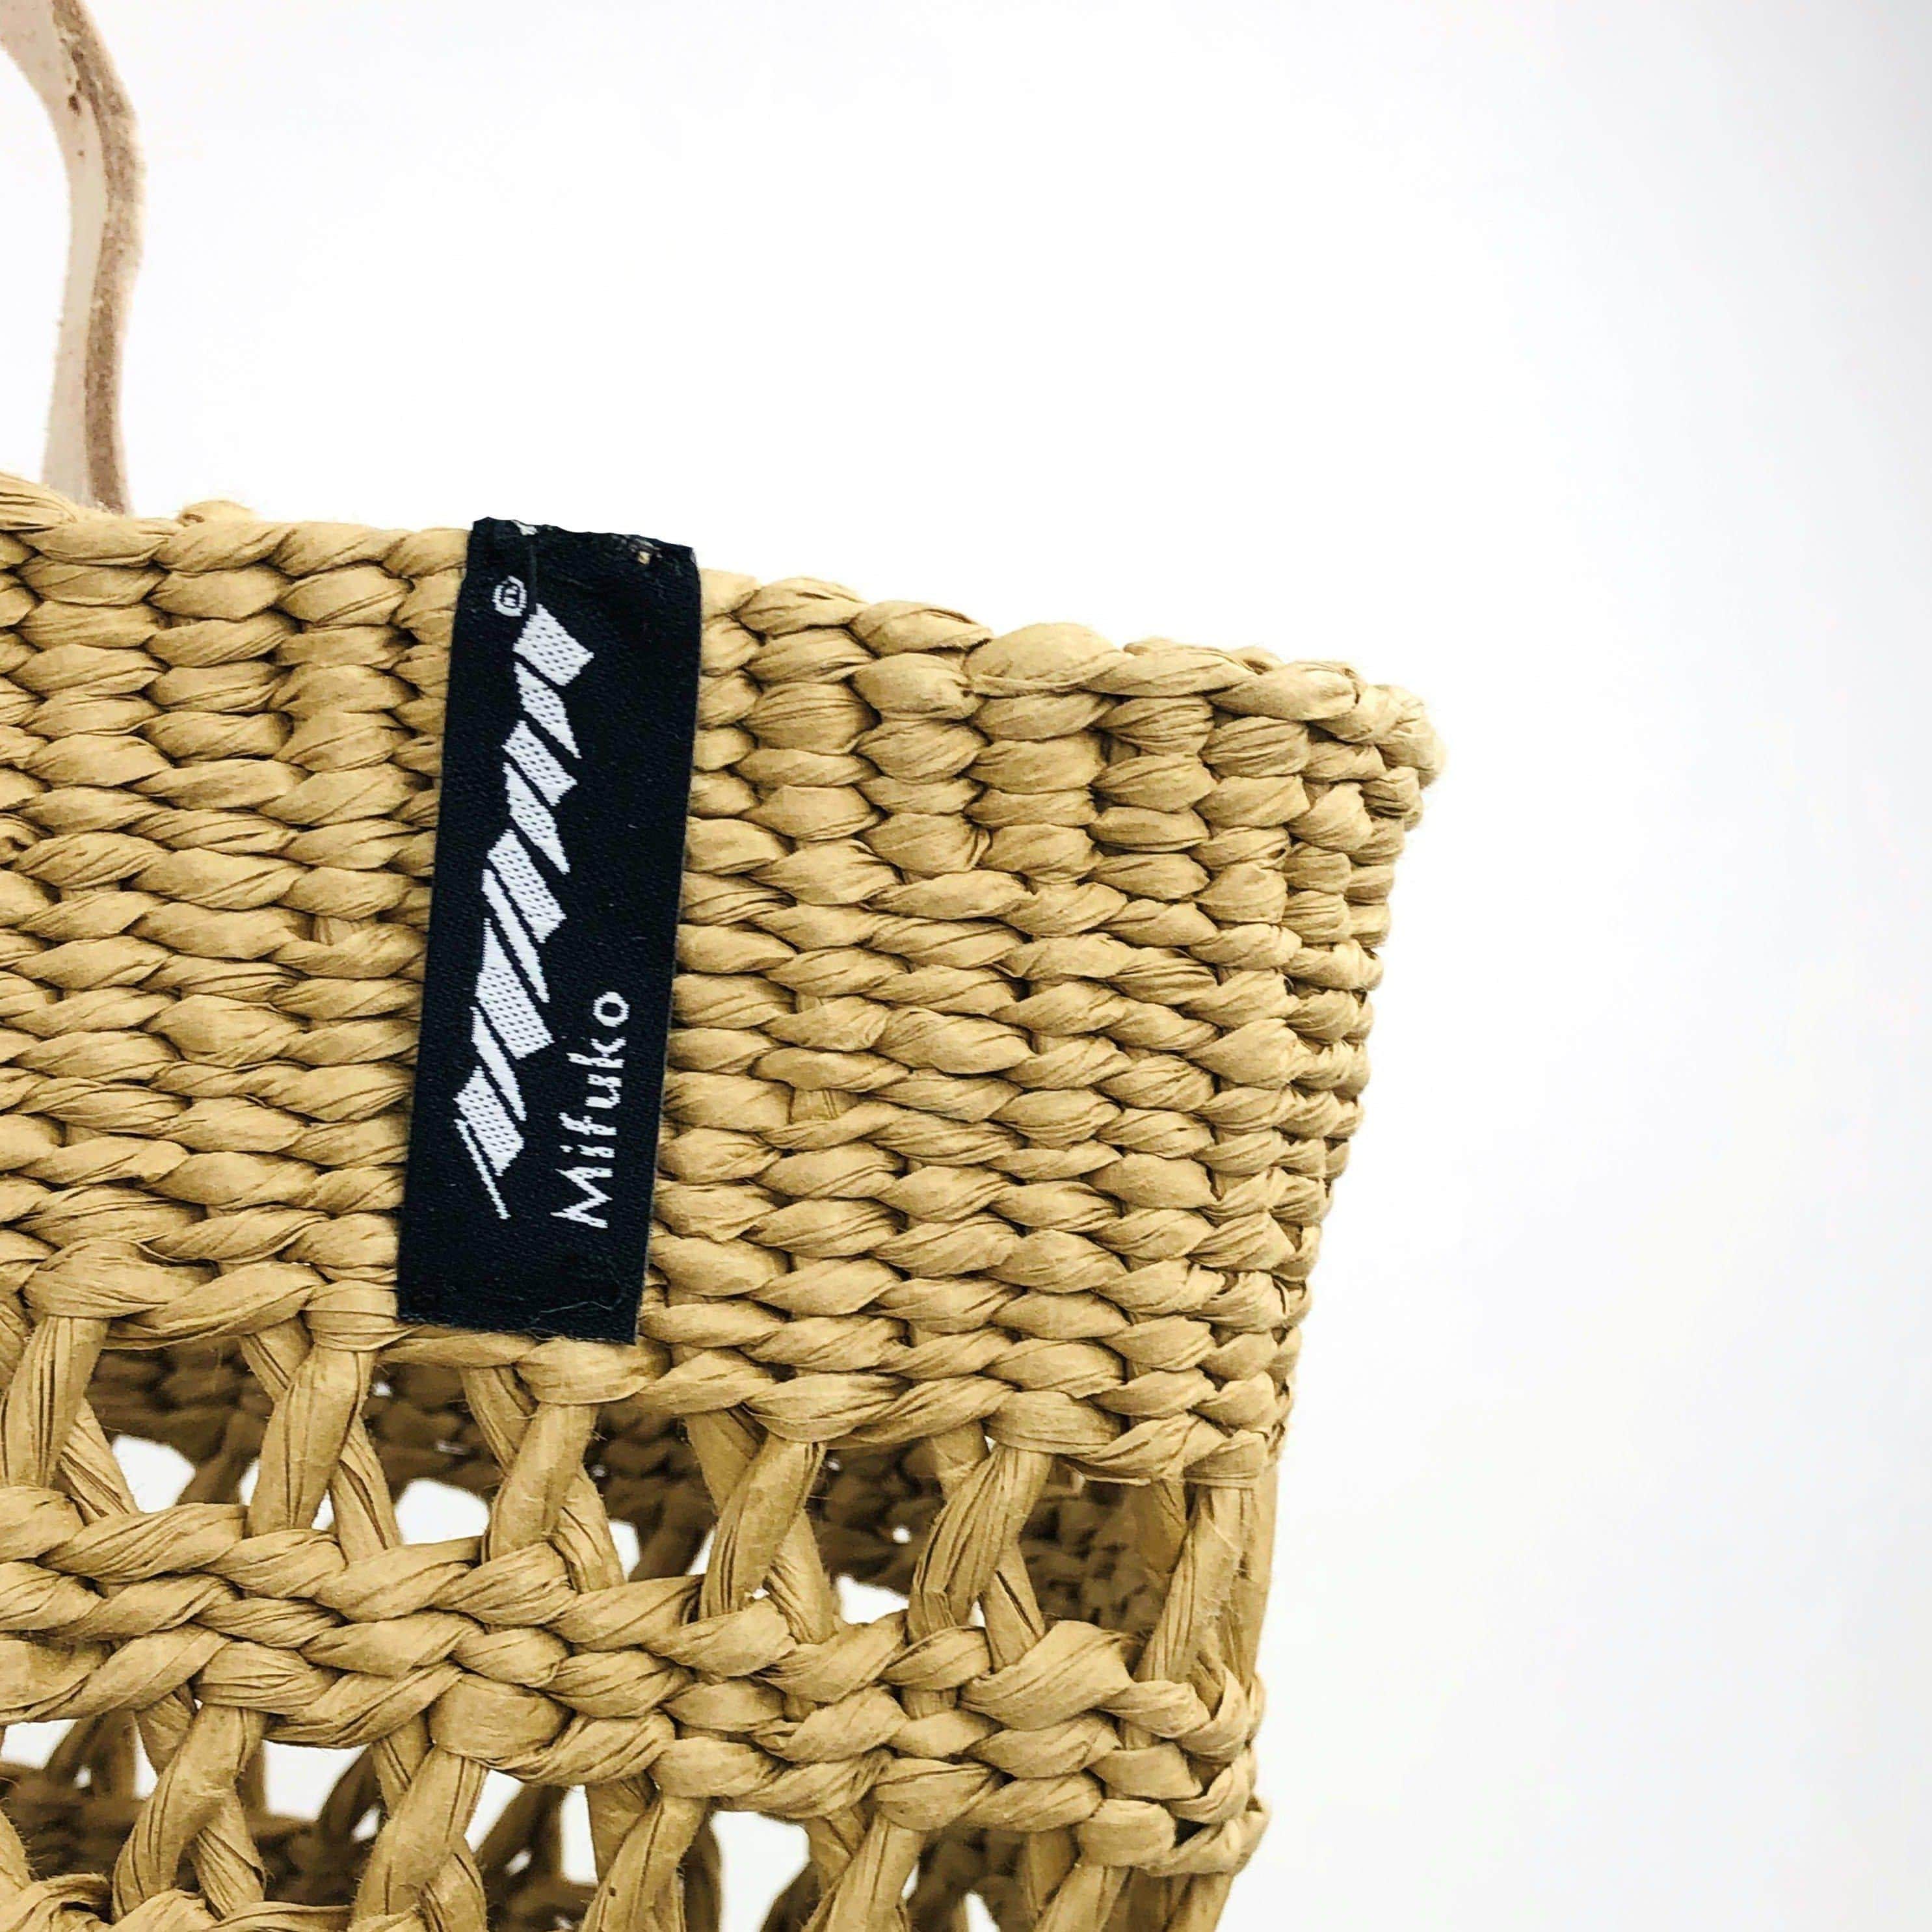 Handmade fair trade Paper Kiondo shopper basket | Brown open weave M